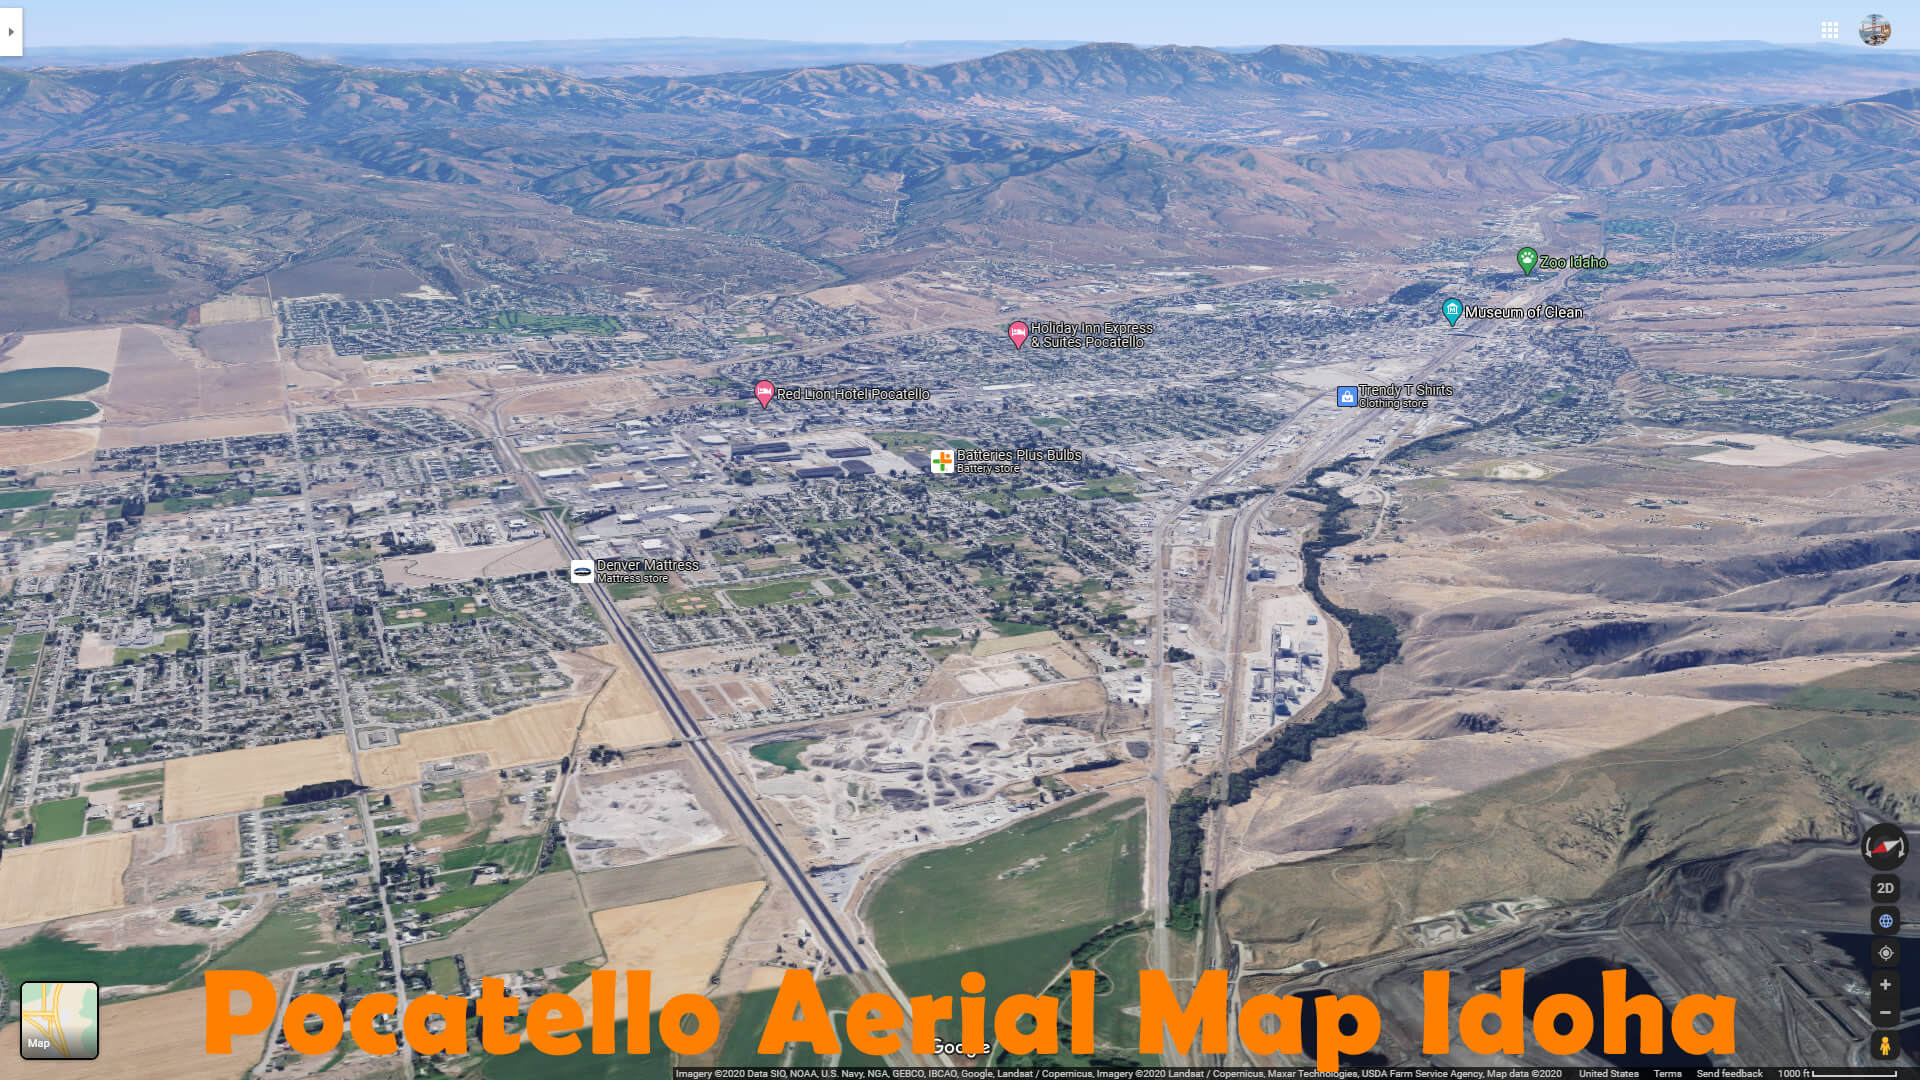 Pocatello Aerial Map Idoha